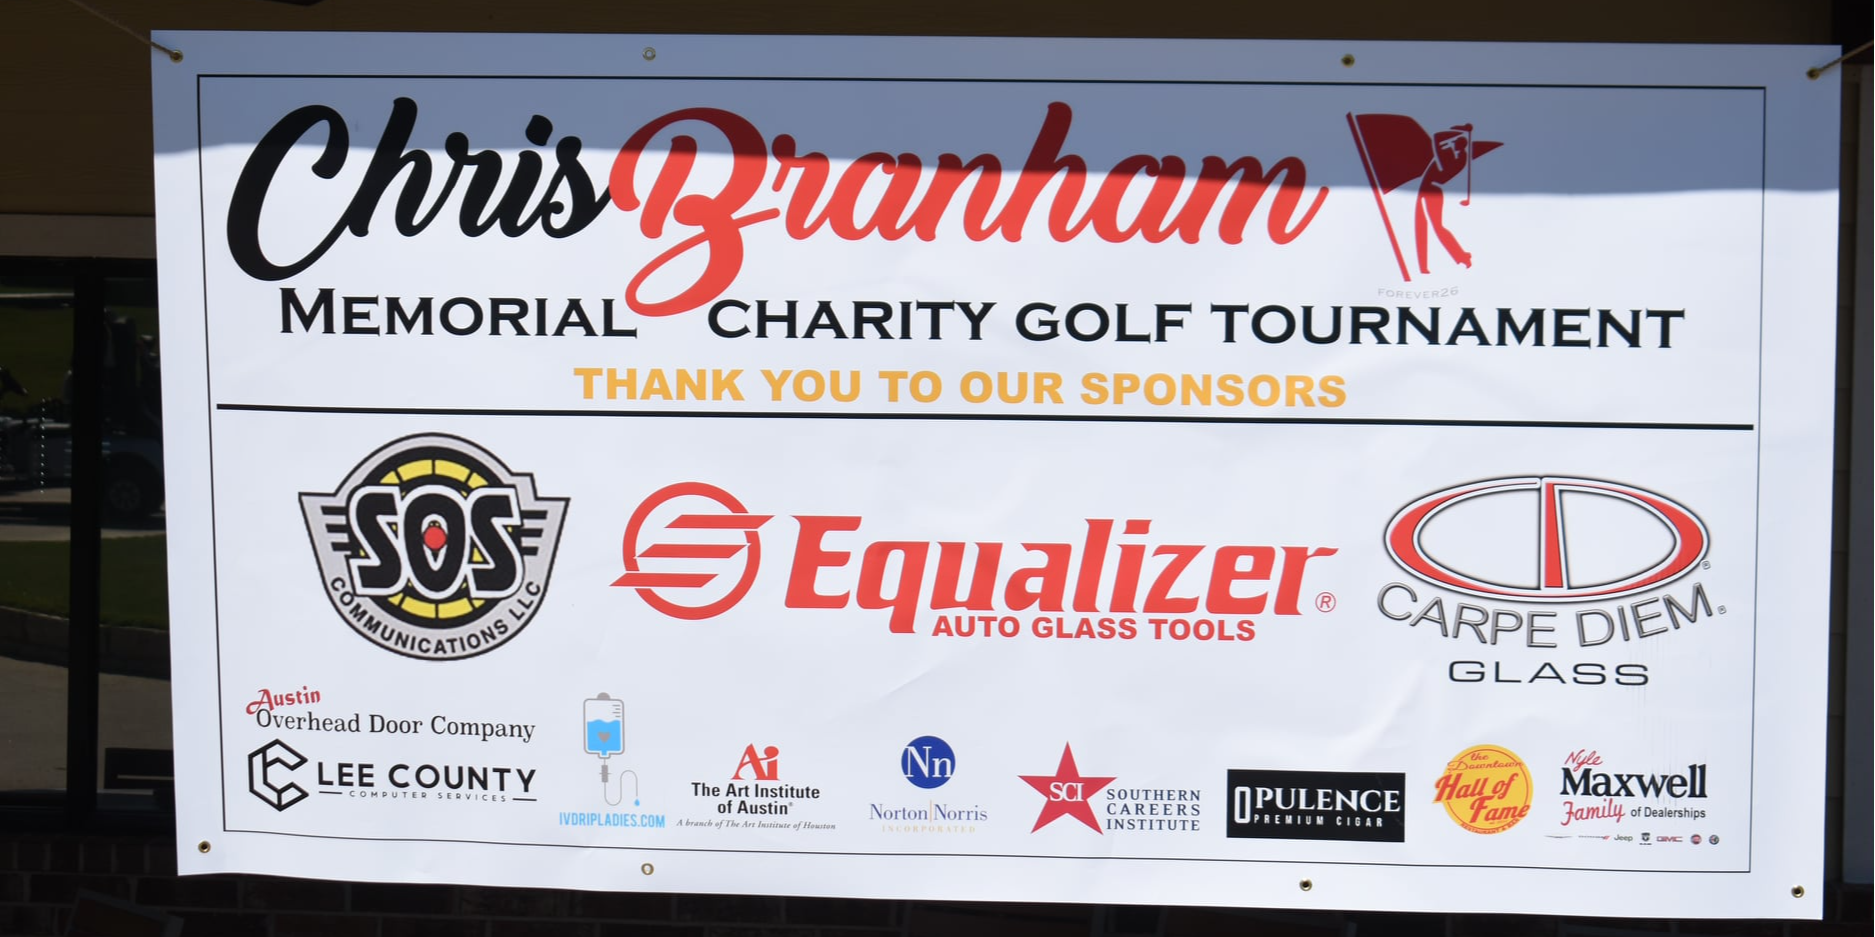 Chris Branham Memorial Charity Golf Tournament